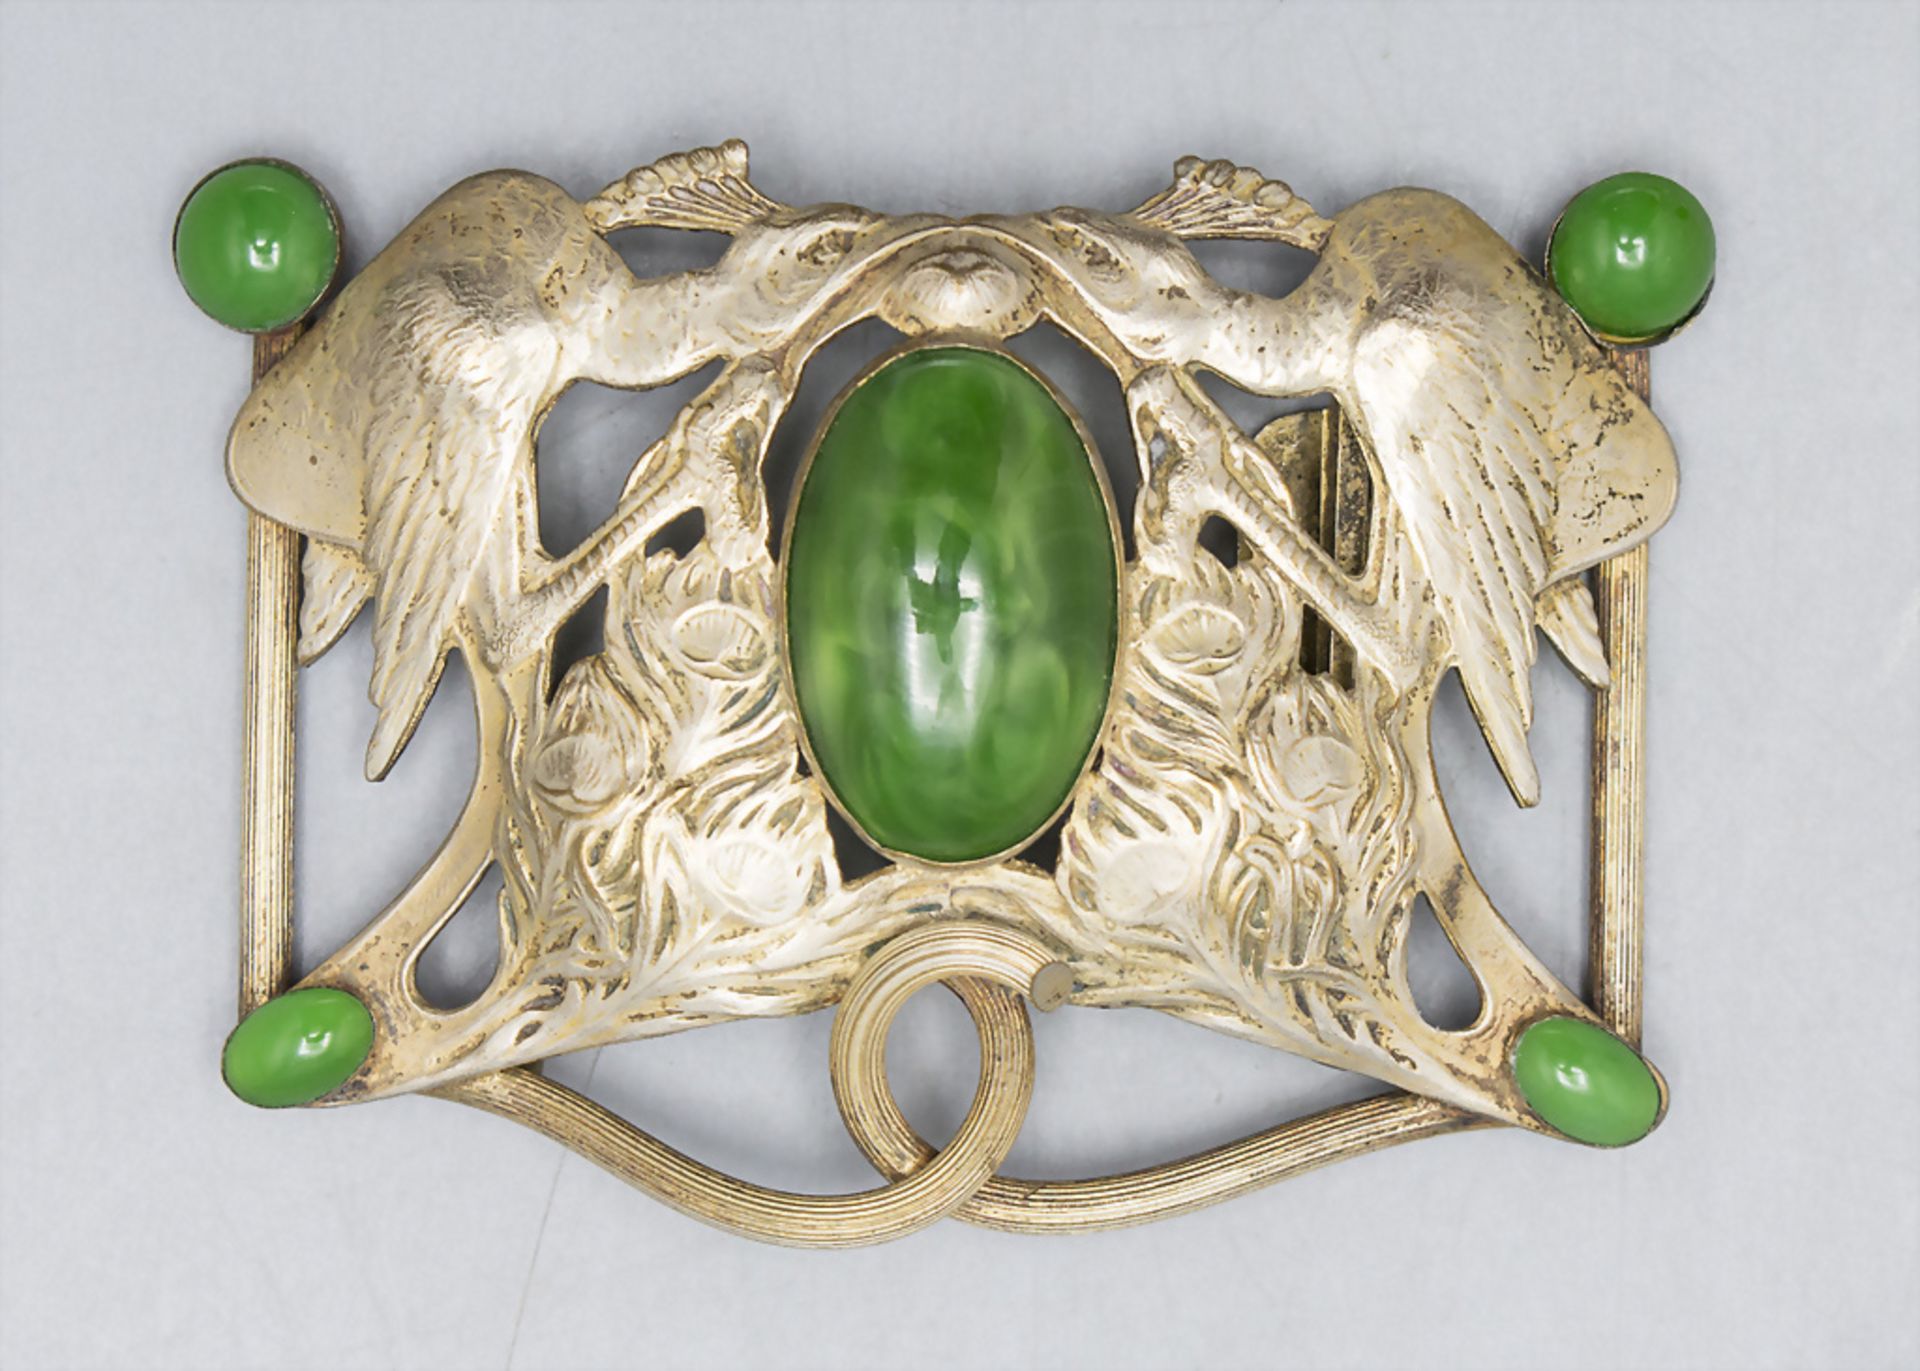 Jugendstil Gürtelschließe mit 2 Pfauen / An Art Nouveau belt buckle with 2 peacocks, deutsch, ...